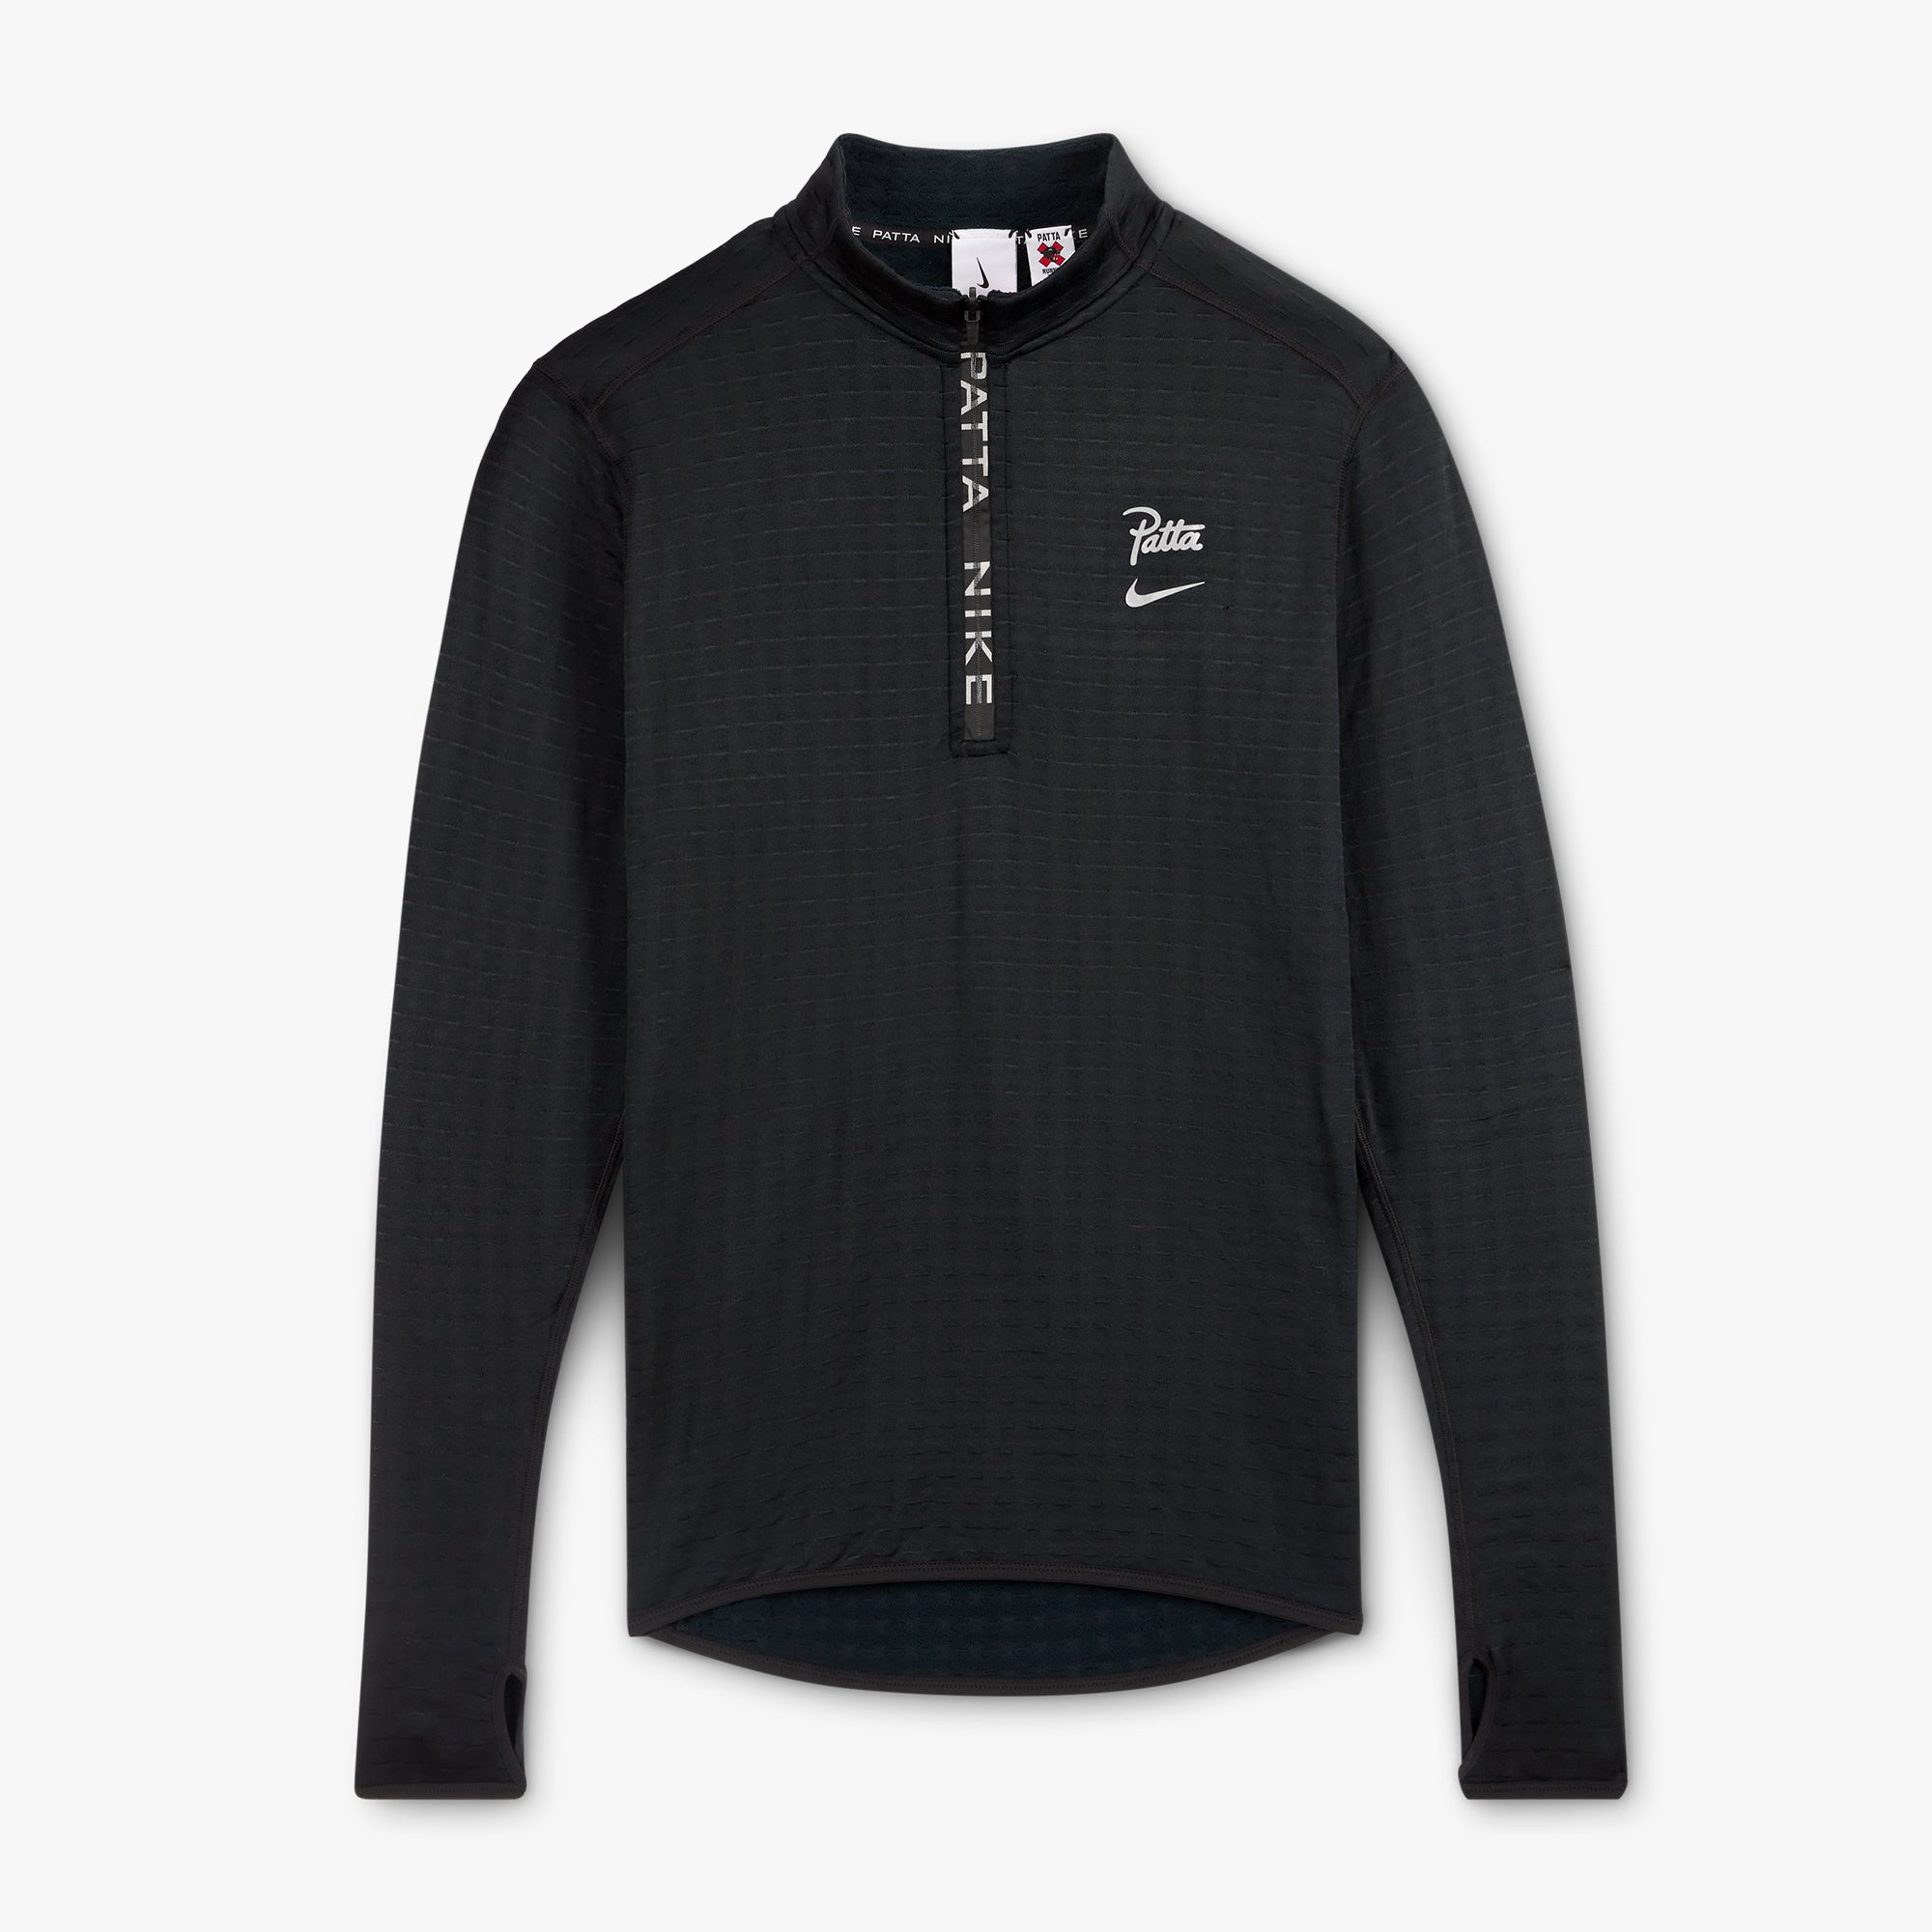 Nike x Patta Half-Zip Long Sleeve Top / Black 1